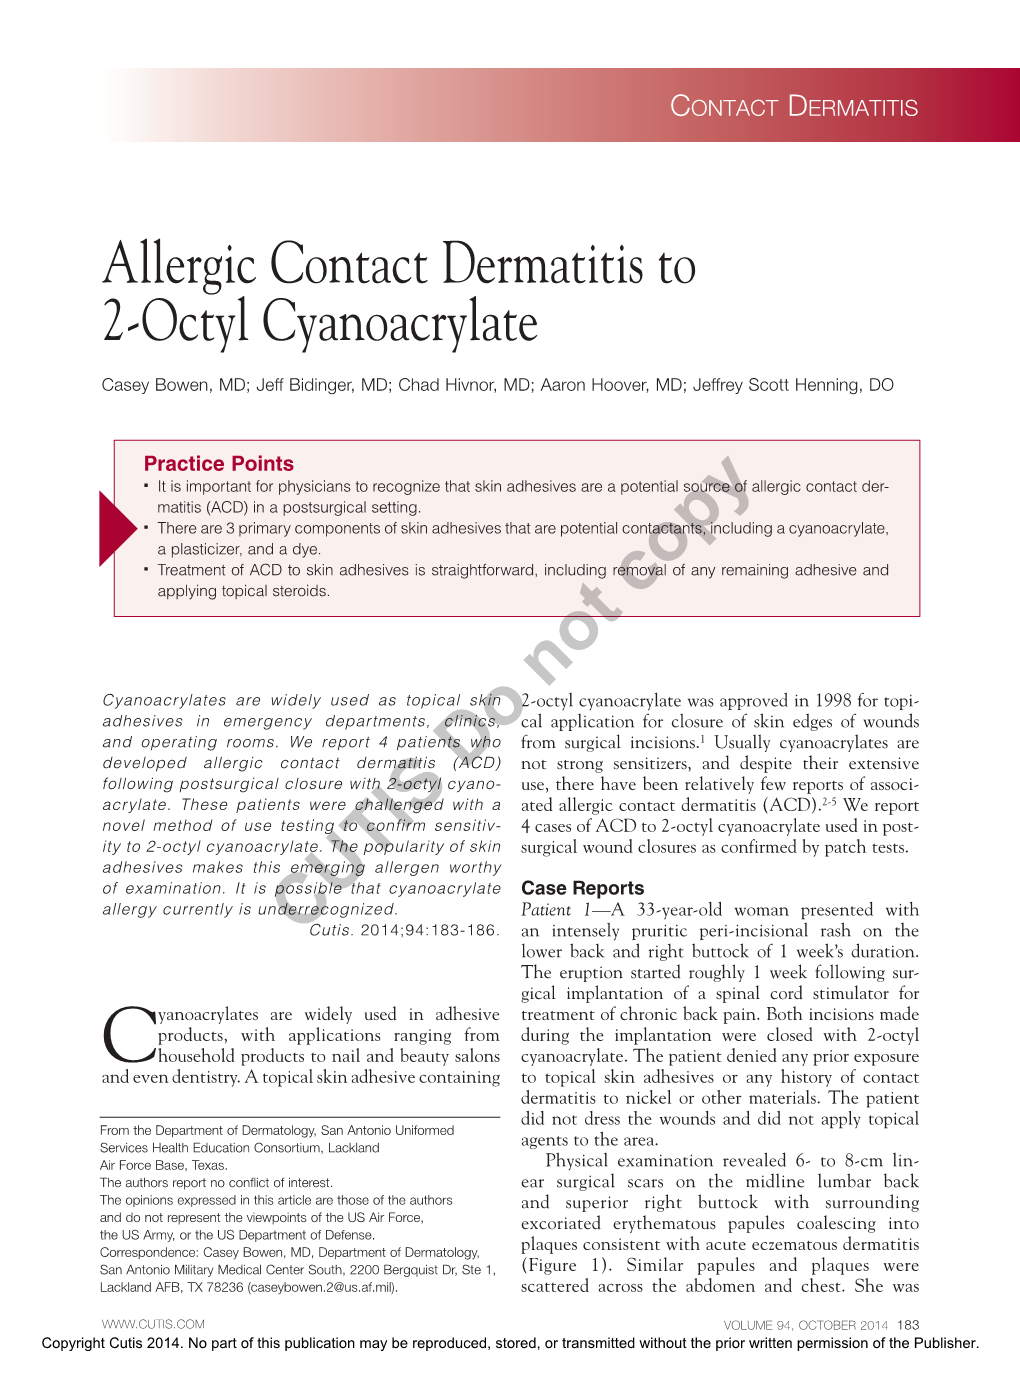 Allergic Contact Dermatitis to 2-Octyl Cyanoacrylate